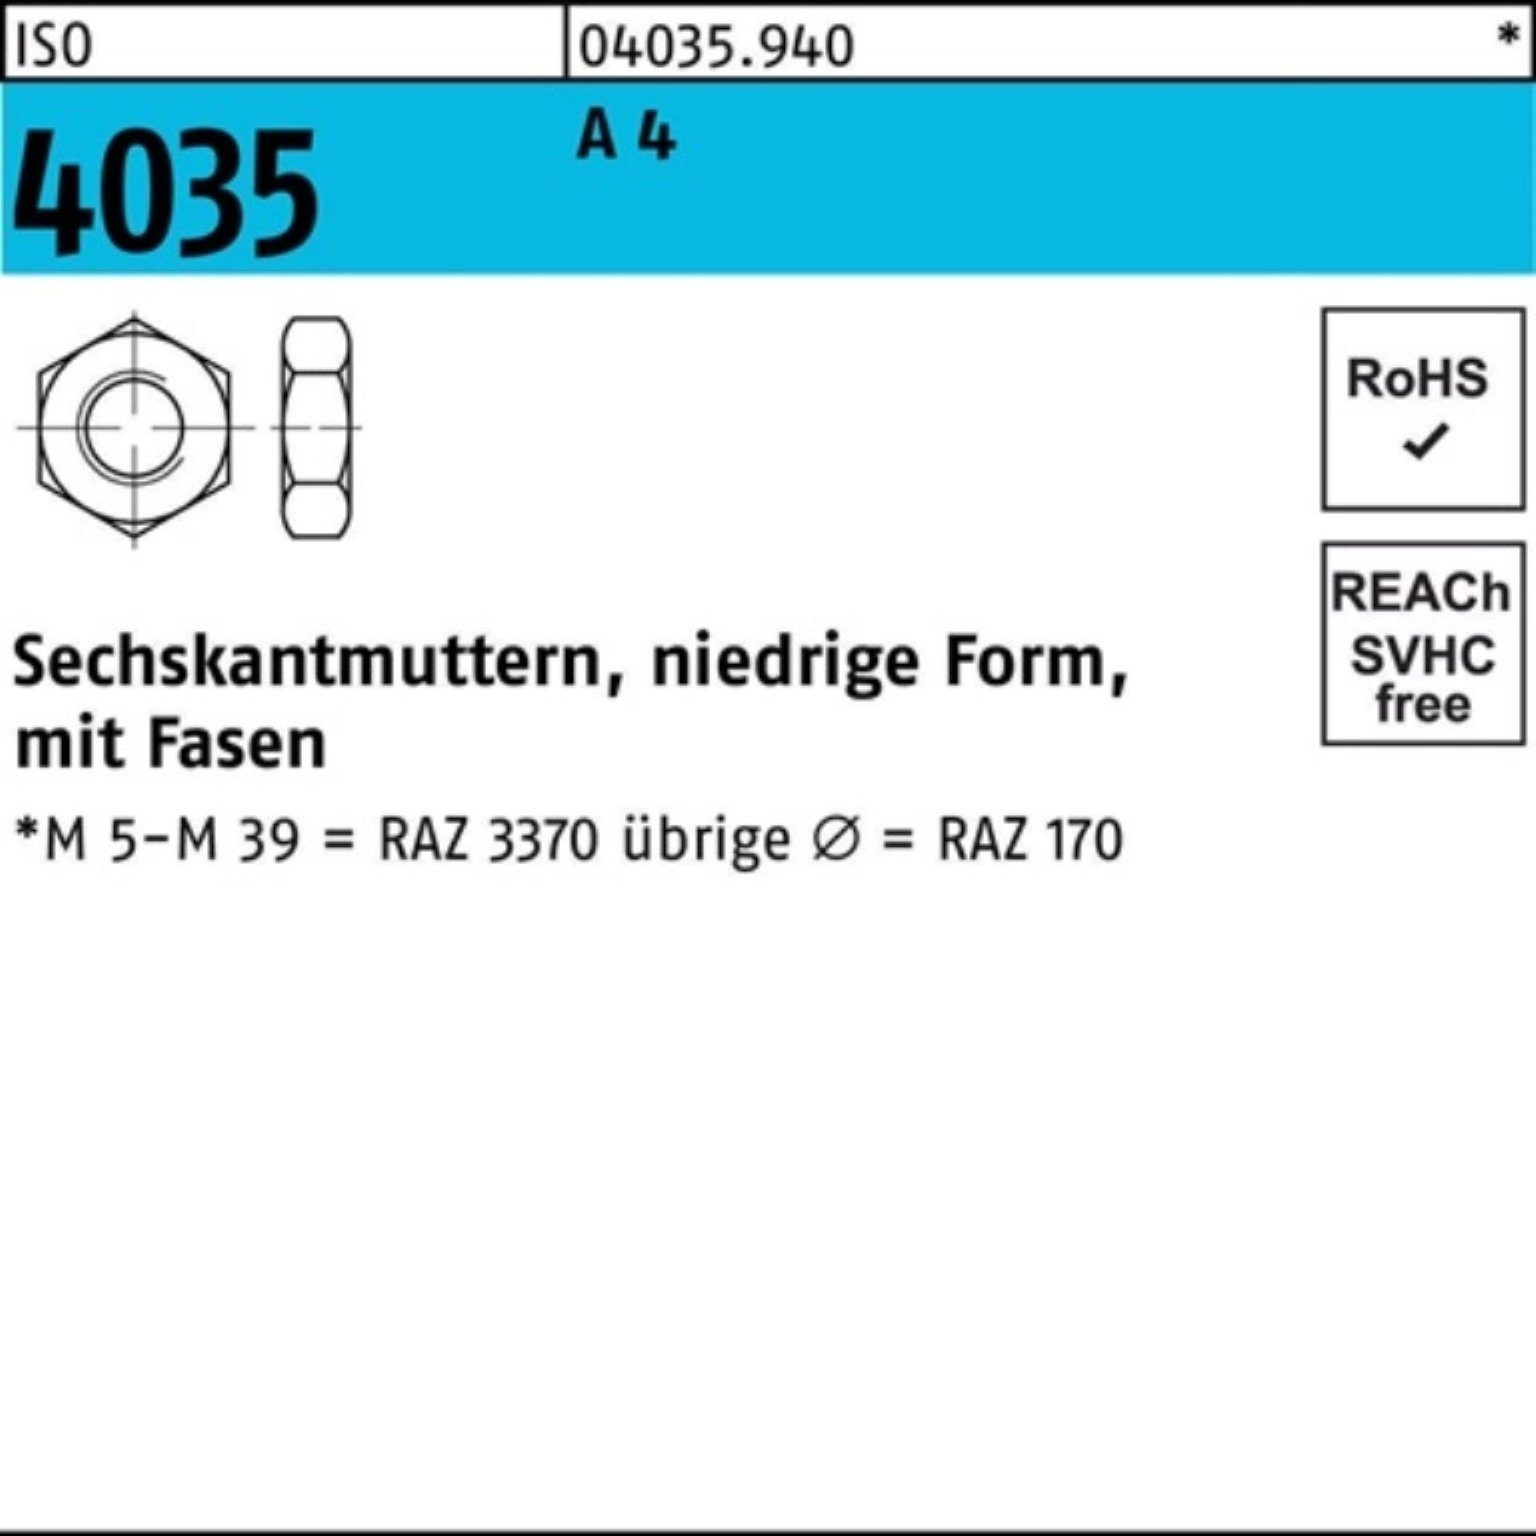 Reyher Muttern 100er Pack Sechskantmutter ISO 4035 niedrig Fasen M2 A 4 100 Stück IS